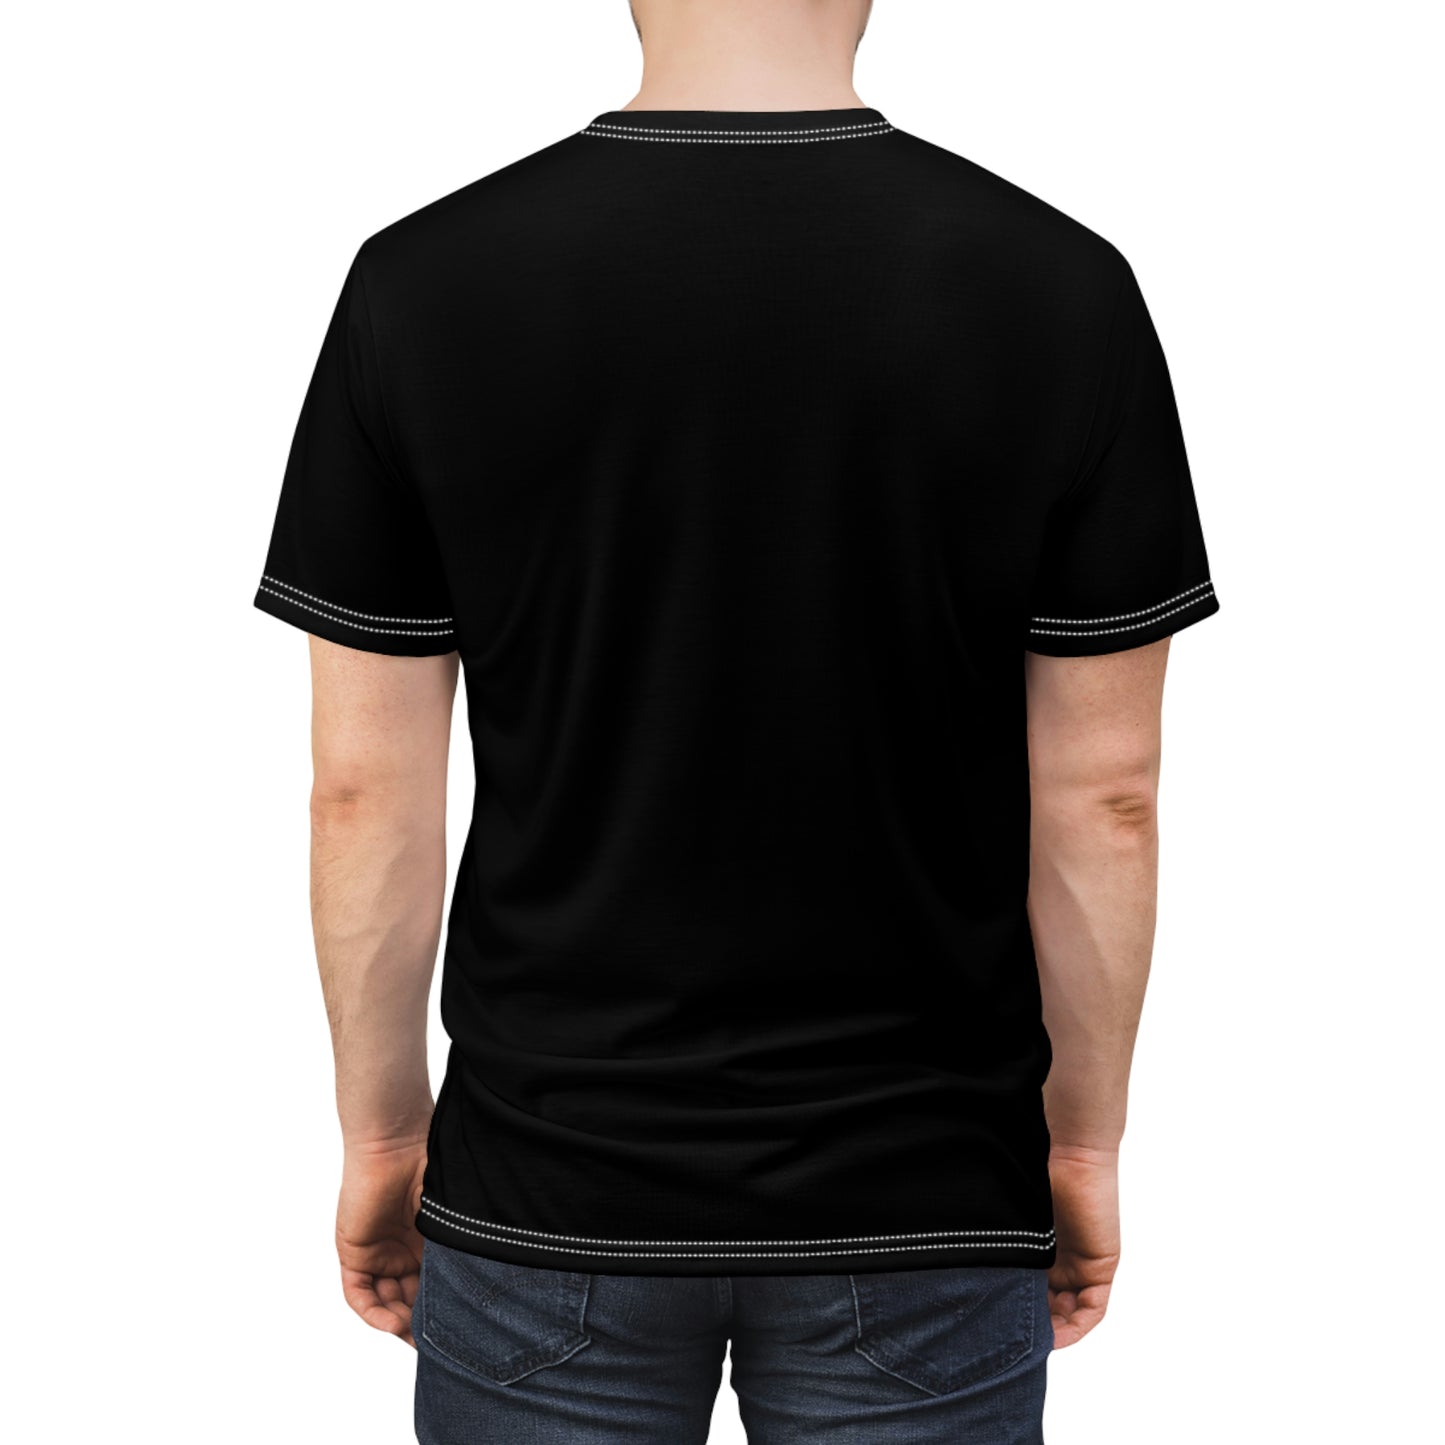 The 11th Percent - Unisex All-Over Print Cut & Sew T-Shirt